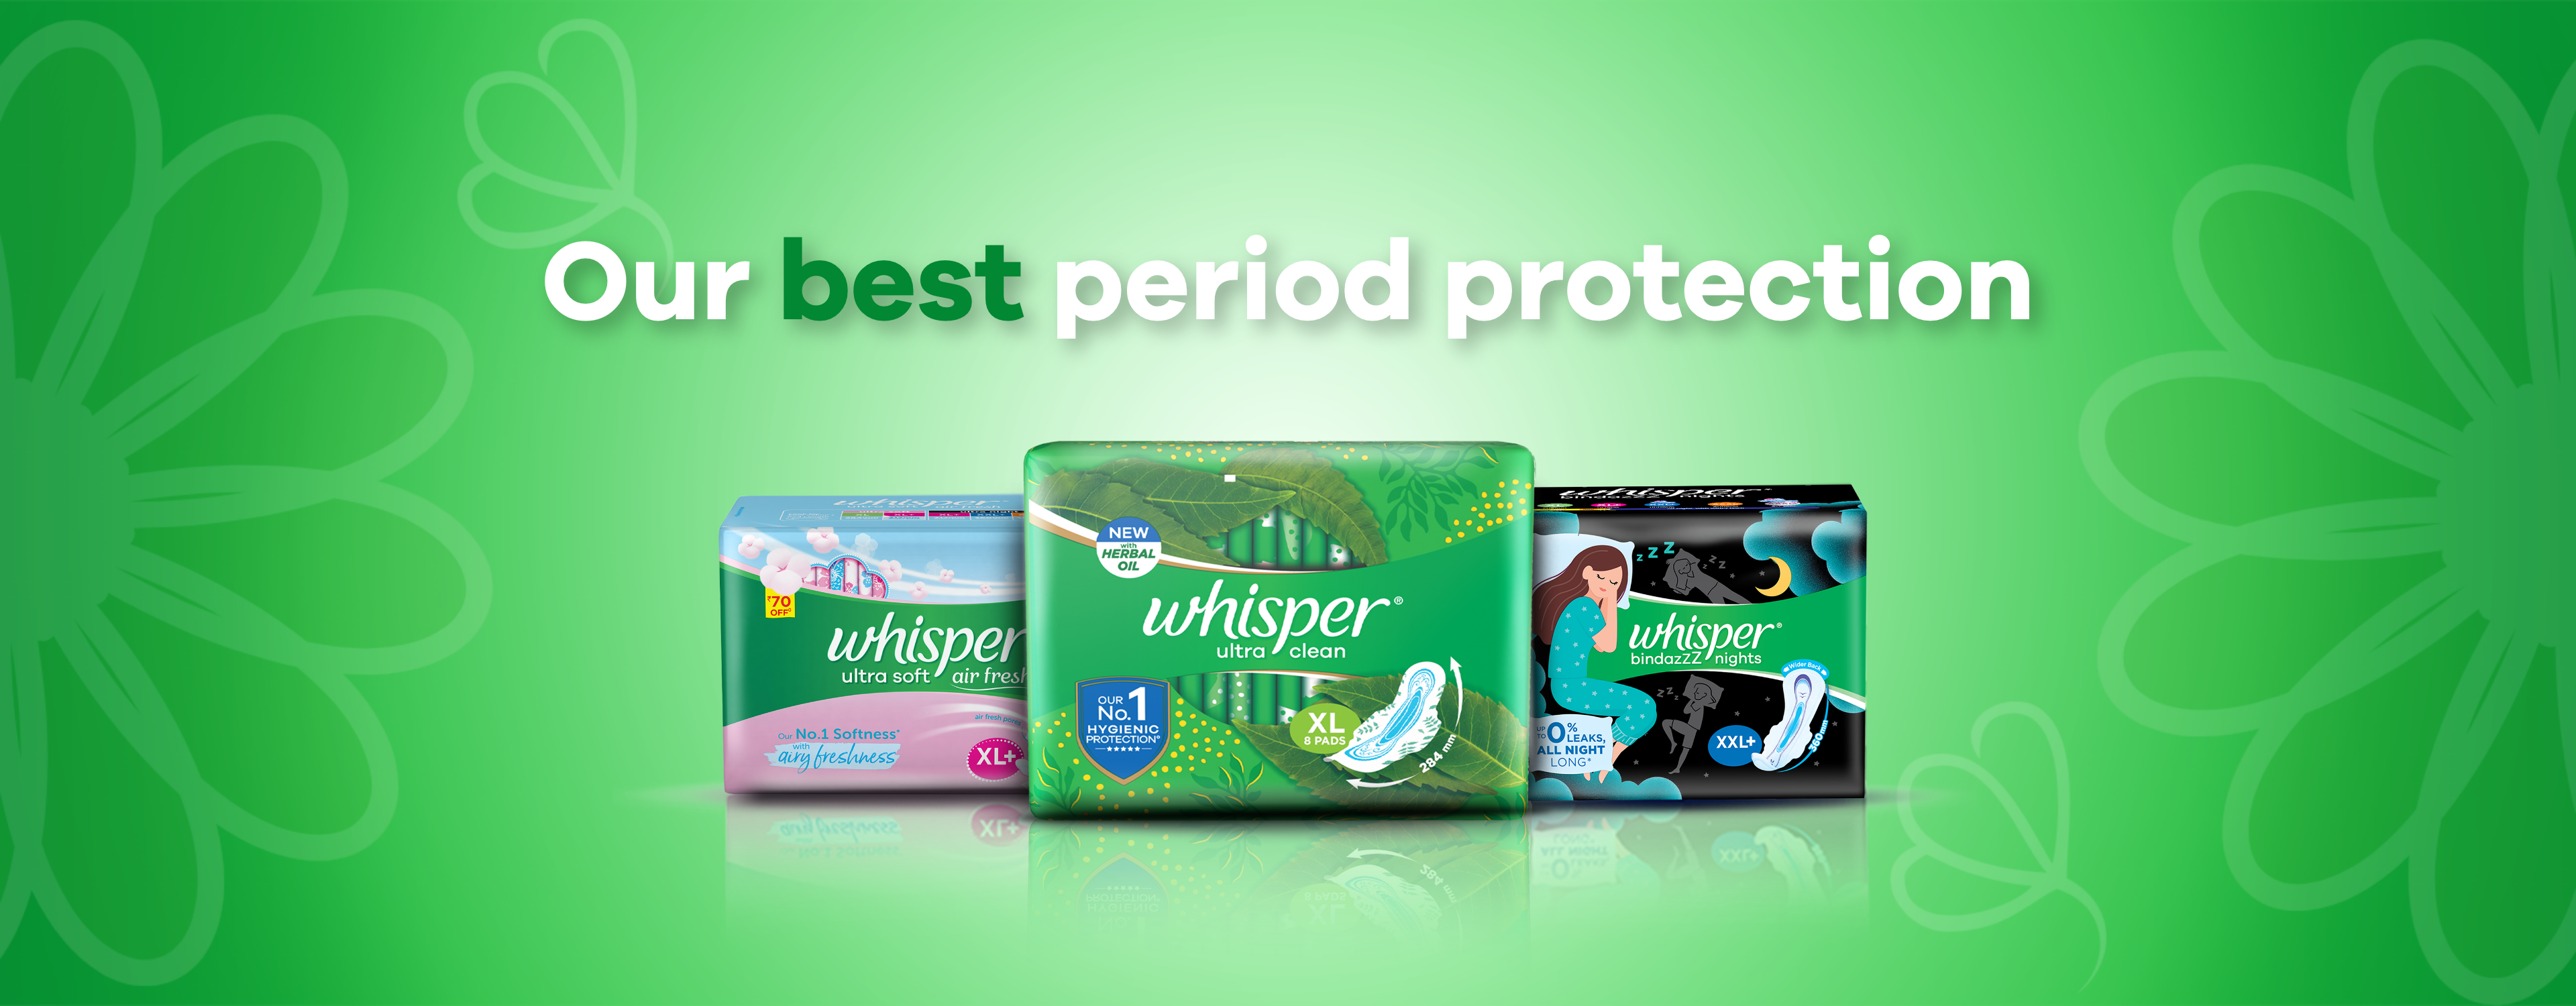 Whisper Choice Sanitary Pads - Regular - Andaman Greengrocers